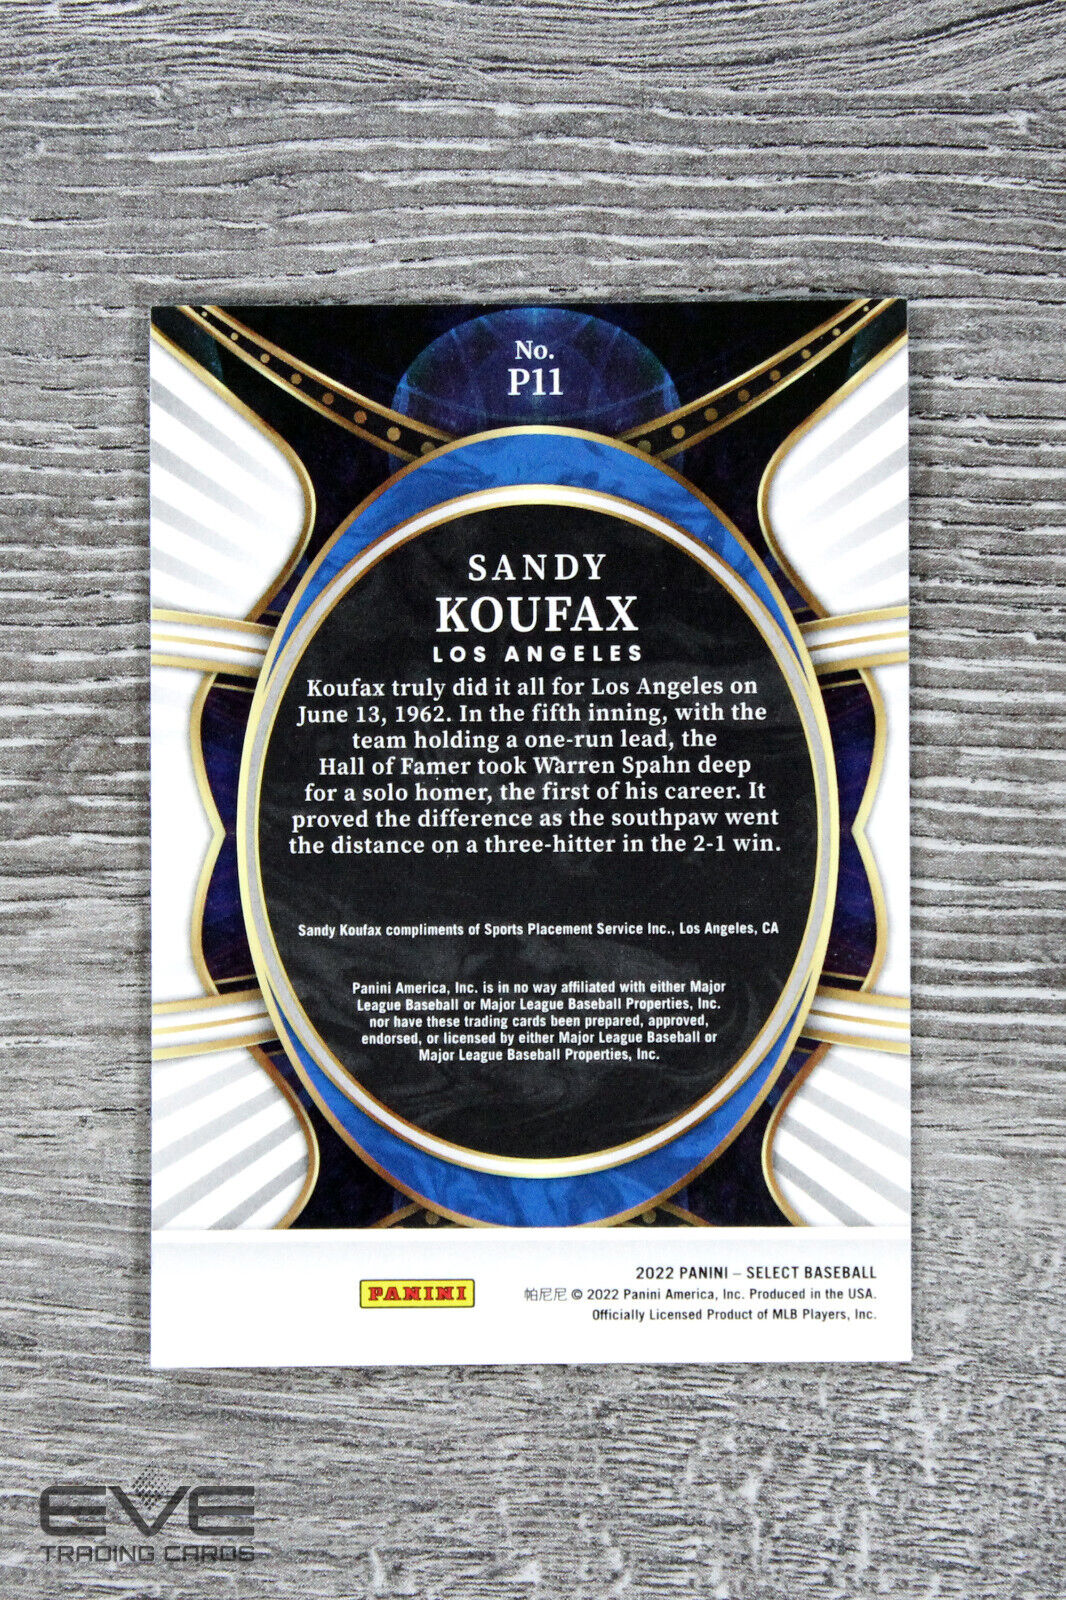 2022 Panini Select Baseball Card #P11 Sandy Koufax Phenomenon Insert - NM/M